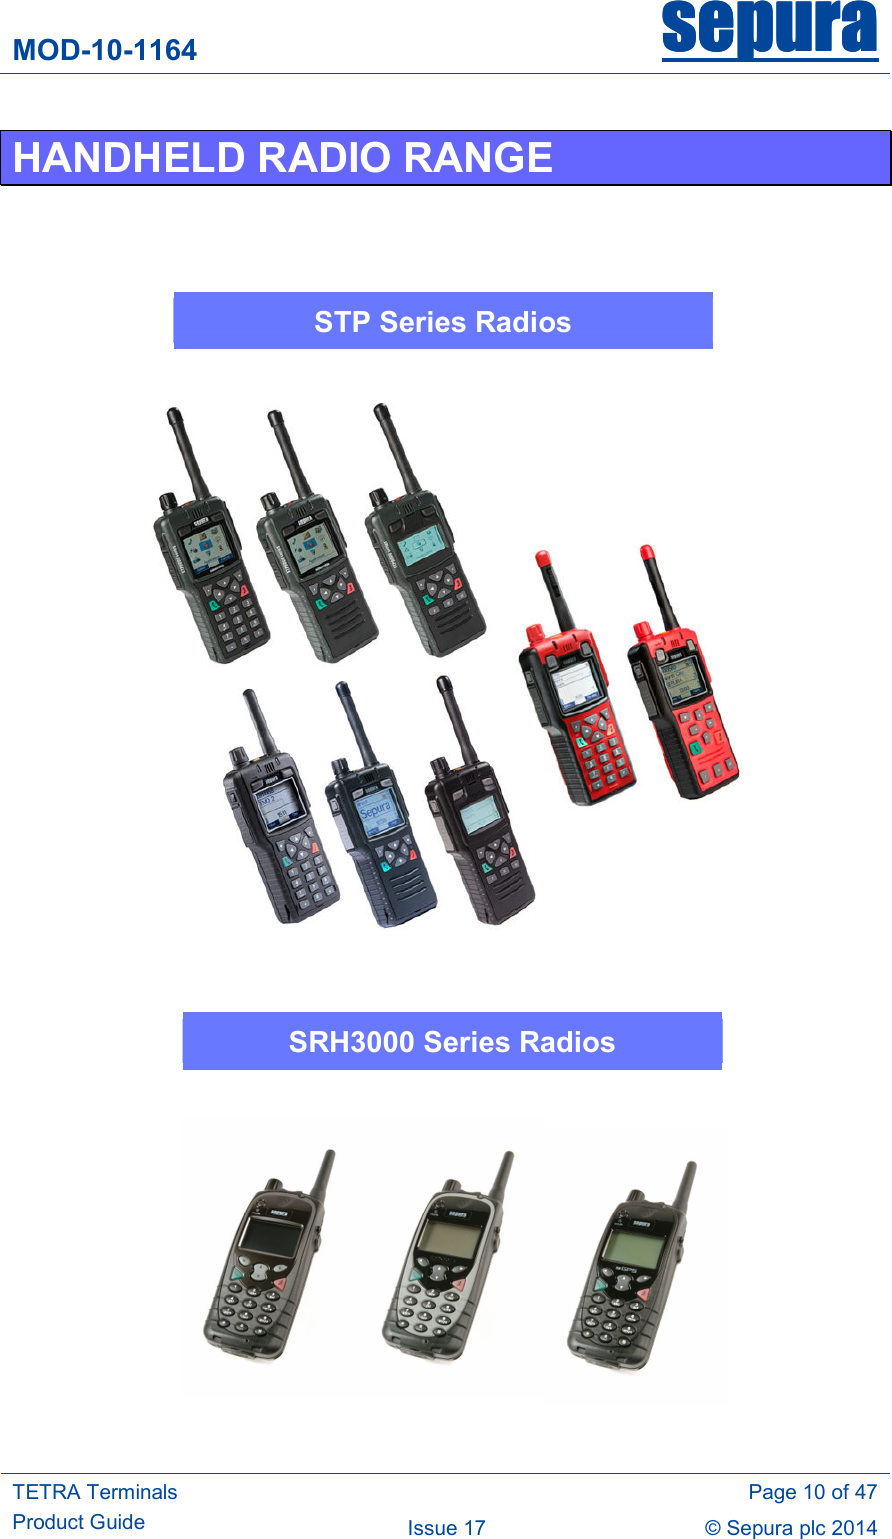 MOD-10-1164 sepurasepurasepurasepura     TETRA Terminals Product Guide   Page 10 of 47 Issue 17  © Sepura plc 2014   HANDHELD RADIO RANGE                STP Series Radios SRH3000 Series Radios 